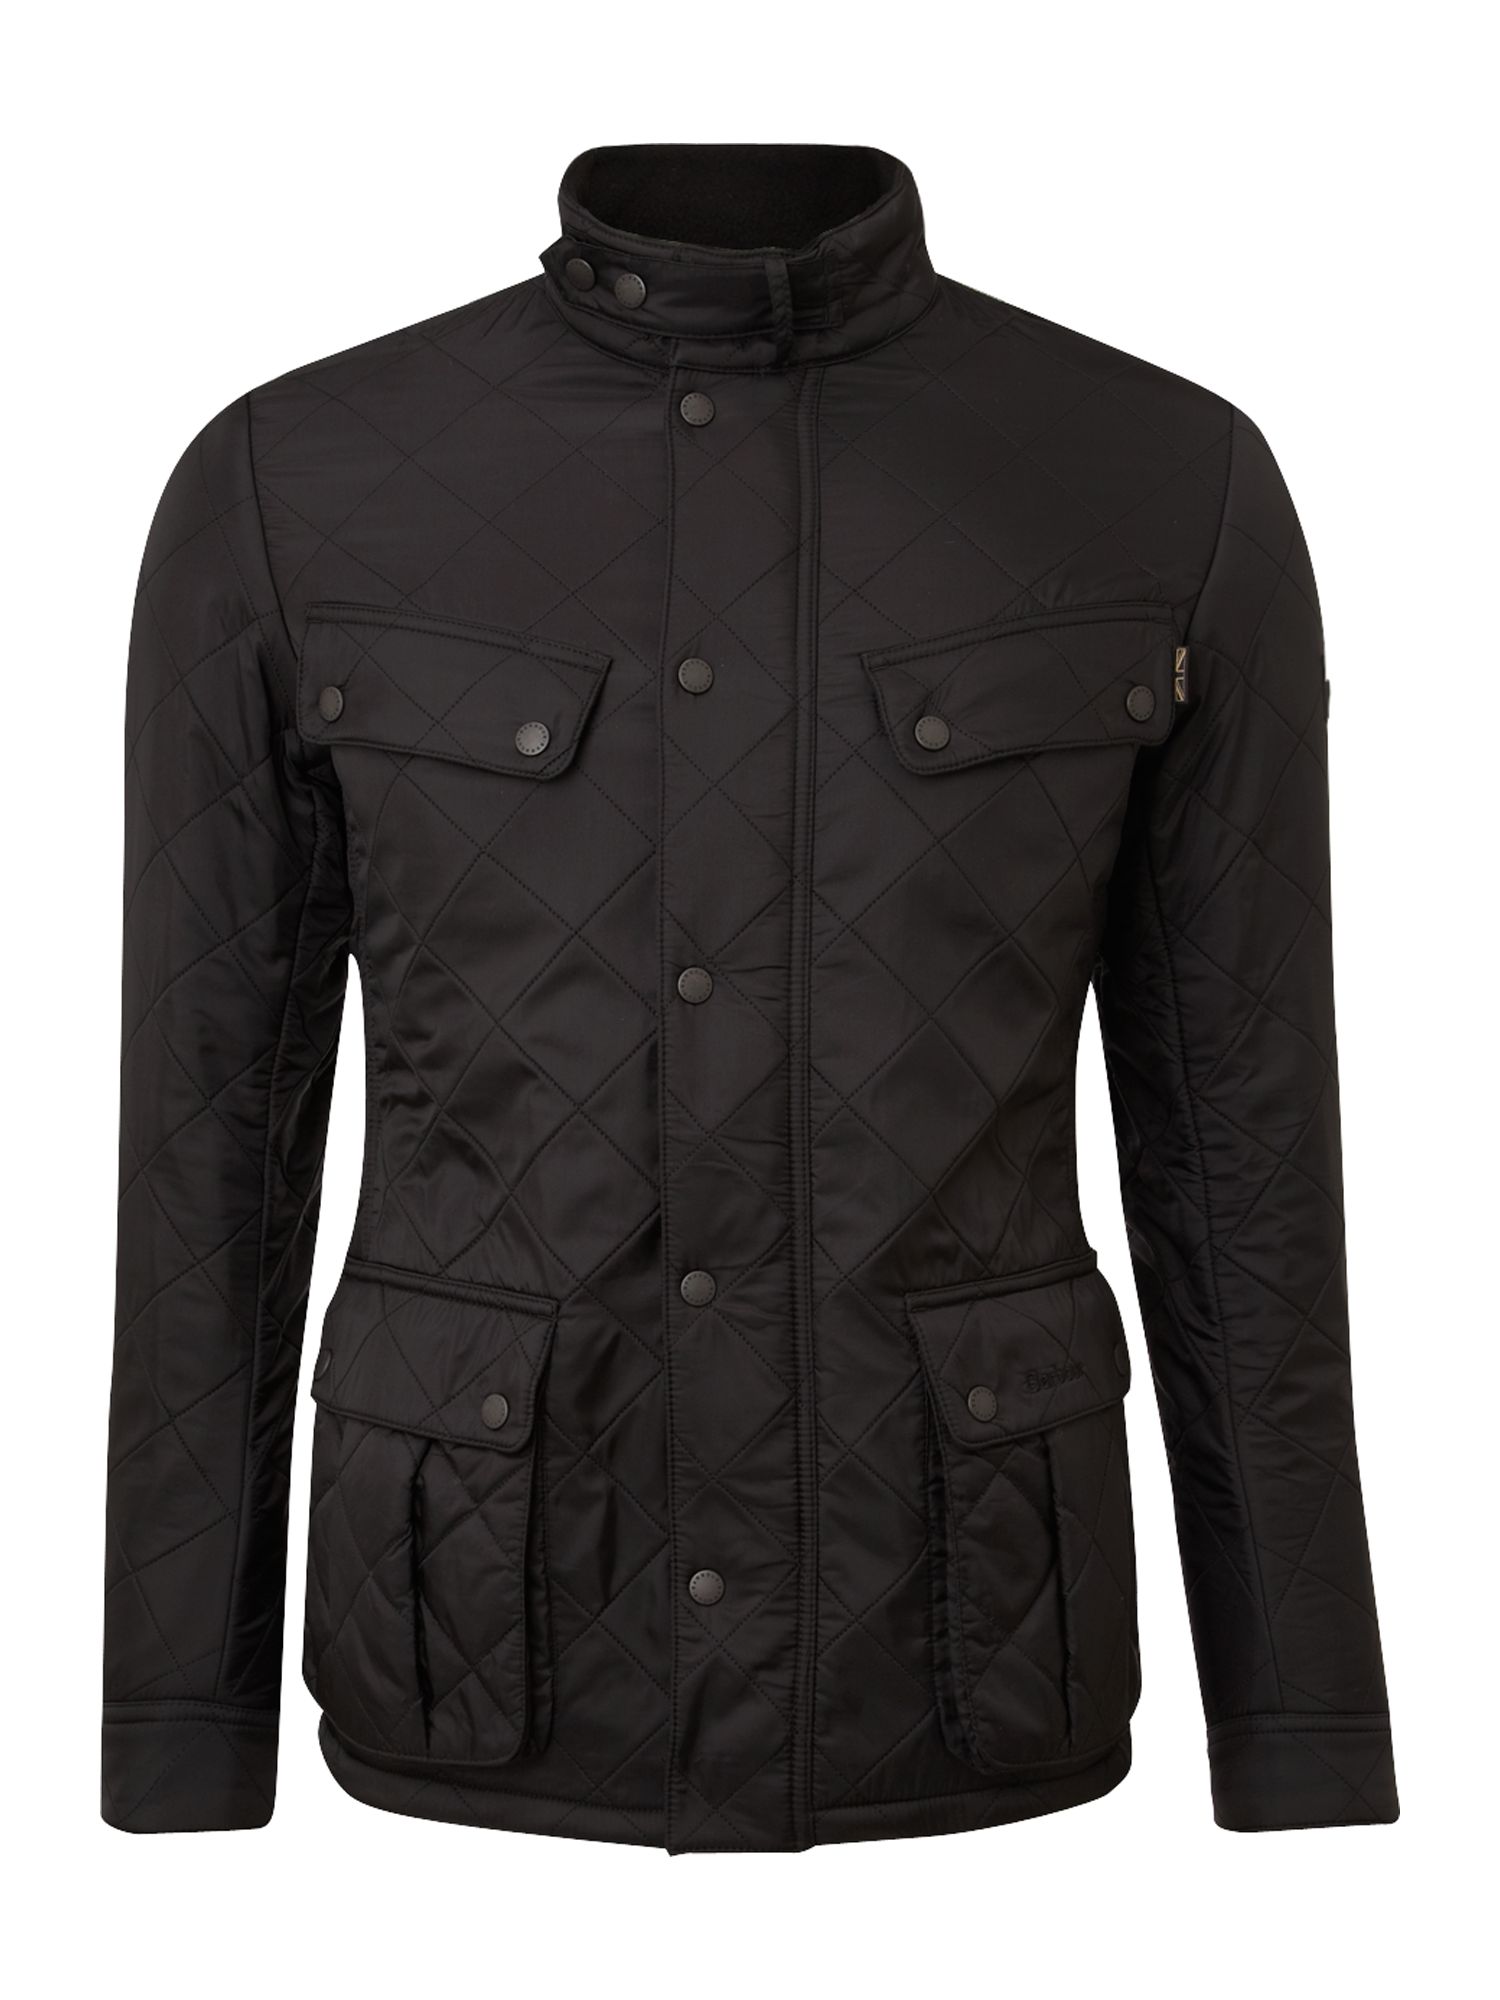 SCOTCH CCWZ Brand Fashion Long Thick Warm Winter Jacket